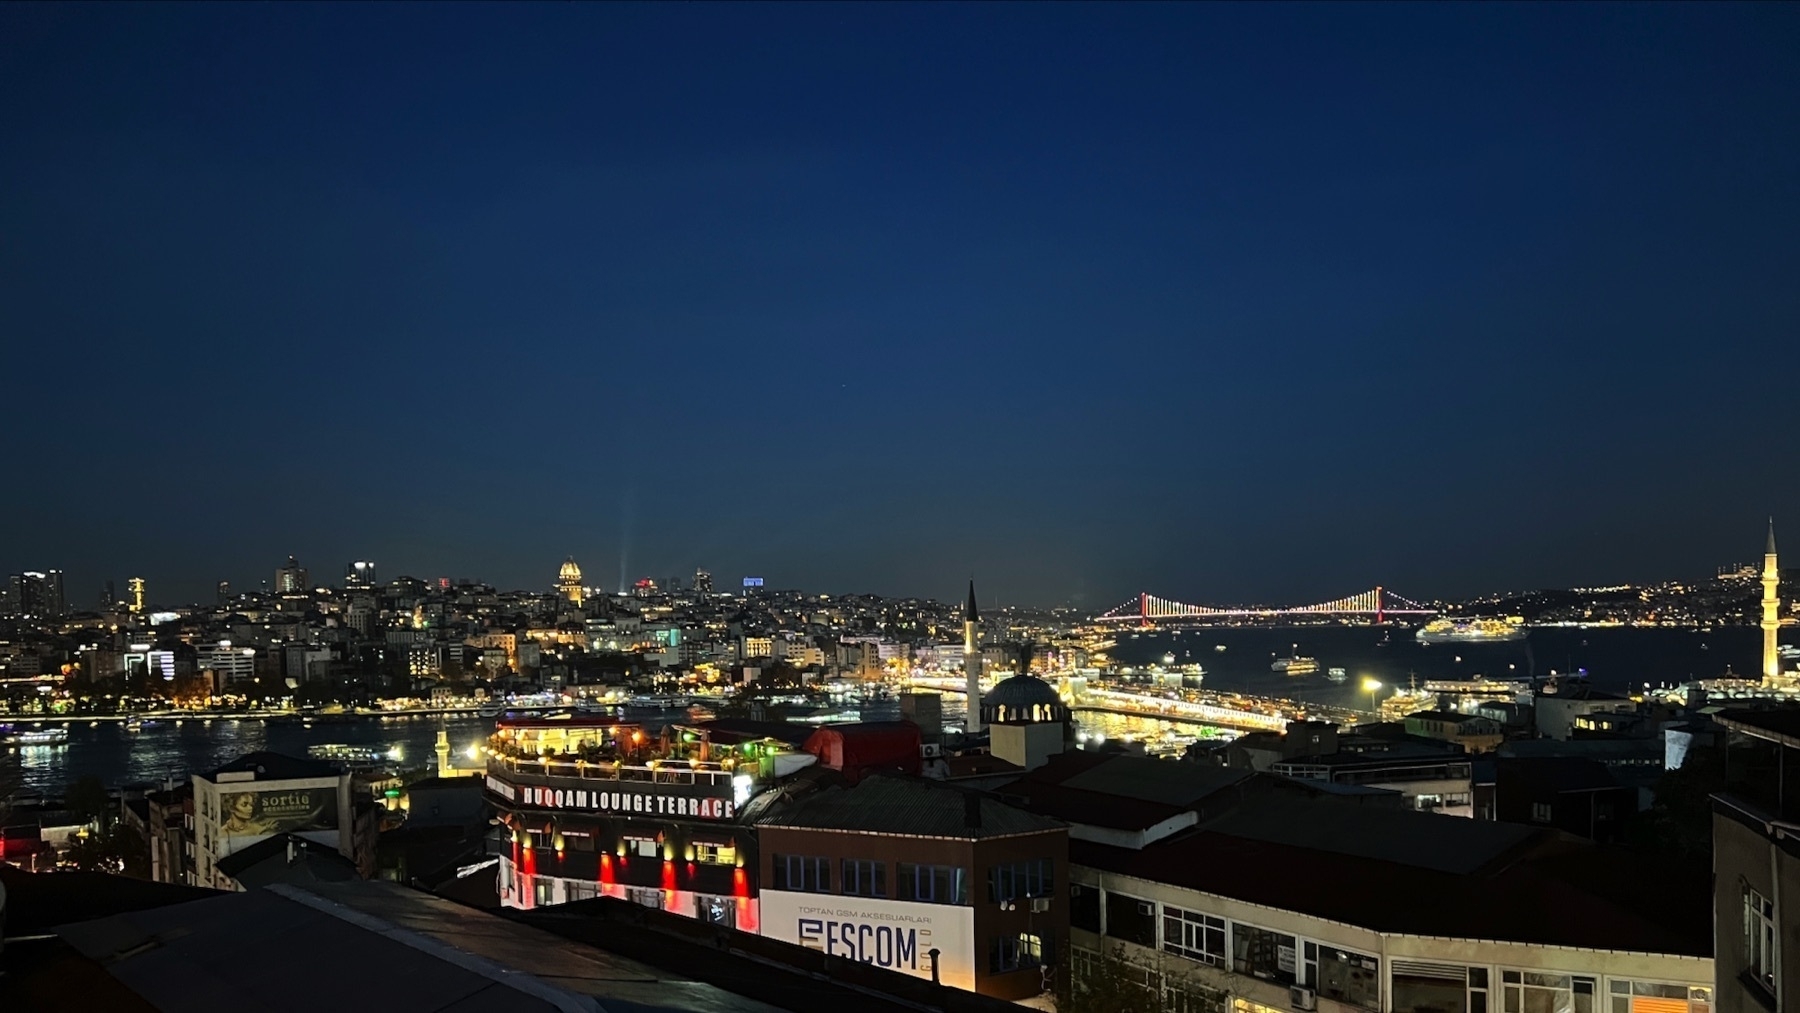 night scene of a city. Bosporus bridge in view